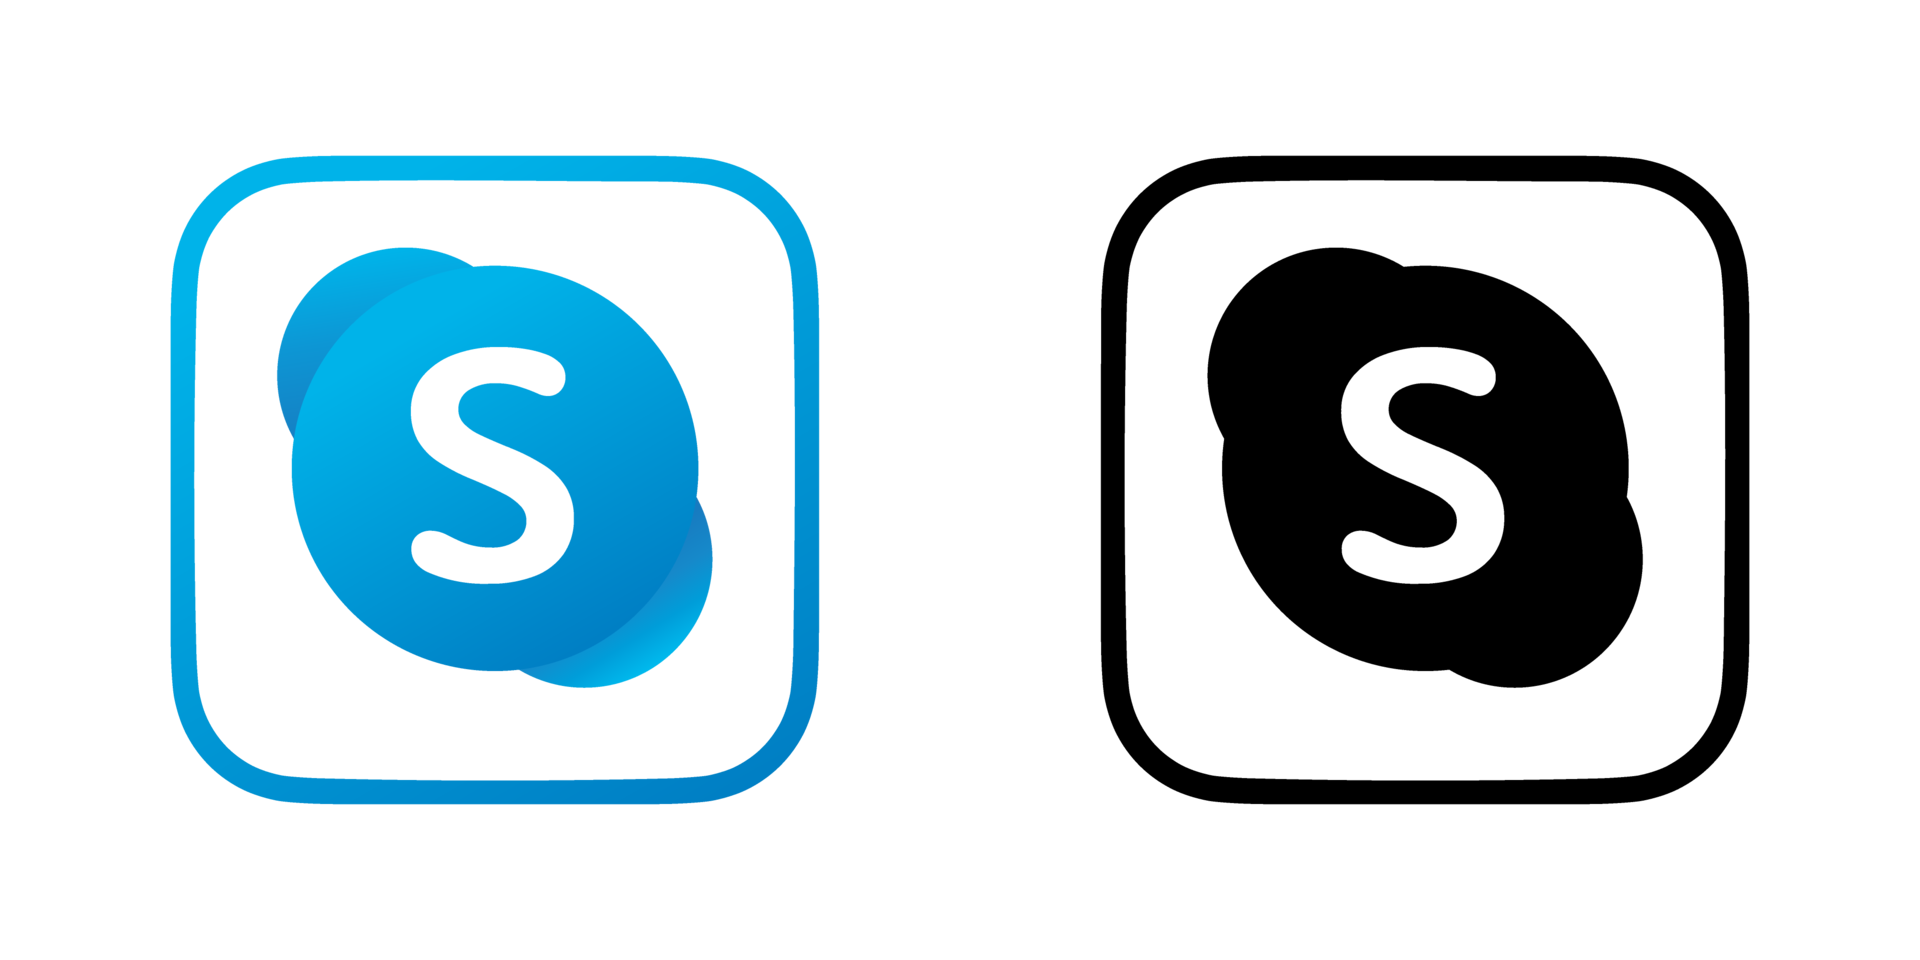  Skype Hintergrundbild 1920x960. Skype logo png, Skype logo transparent png, Skype icon transparent free pngd 23986854 PNG